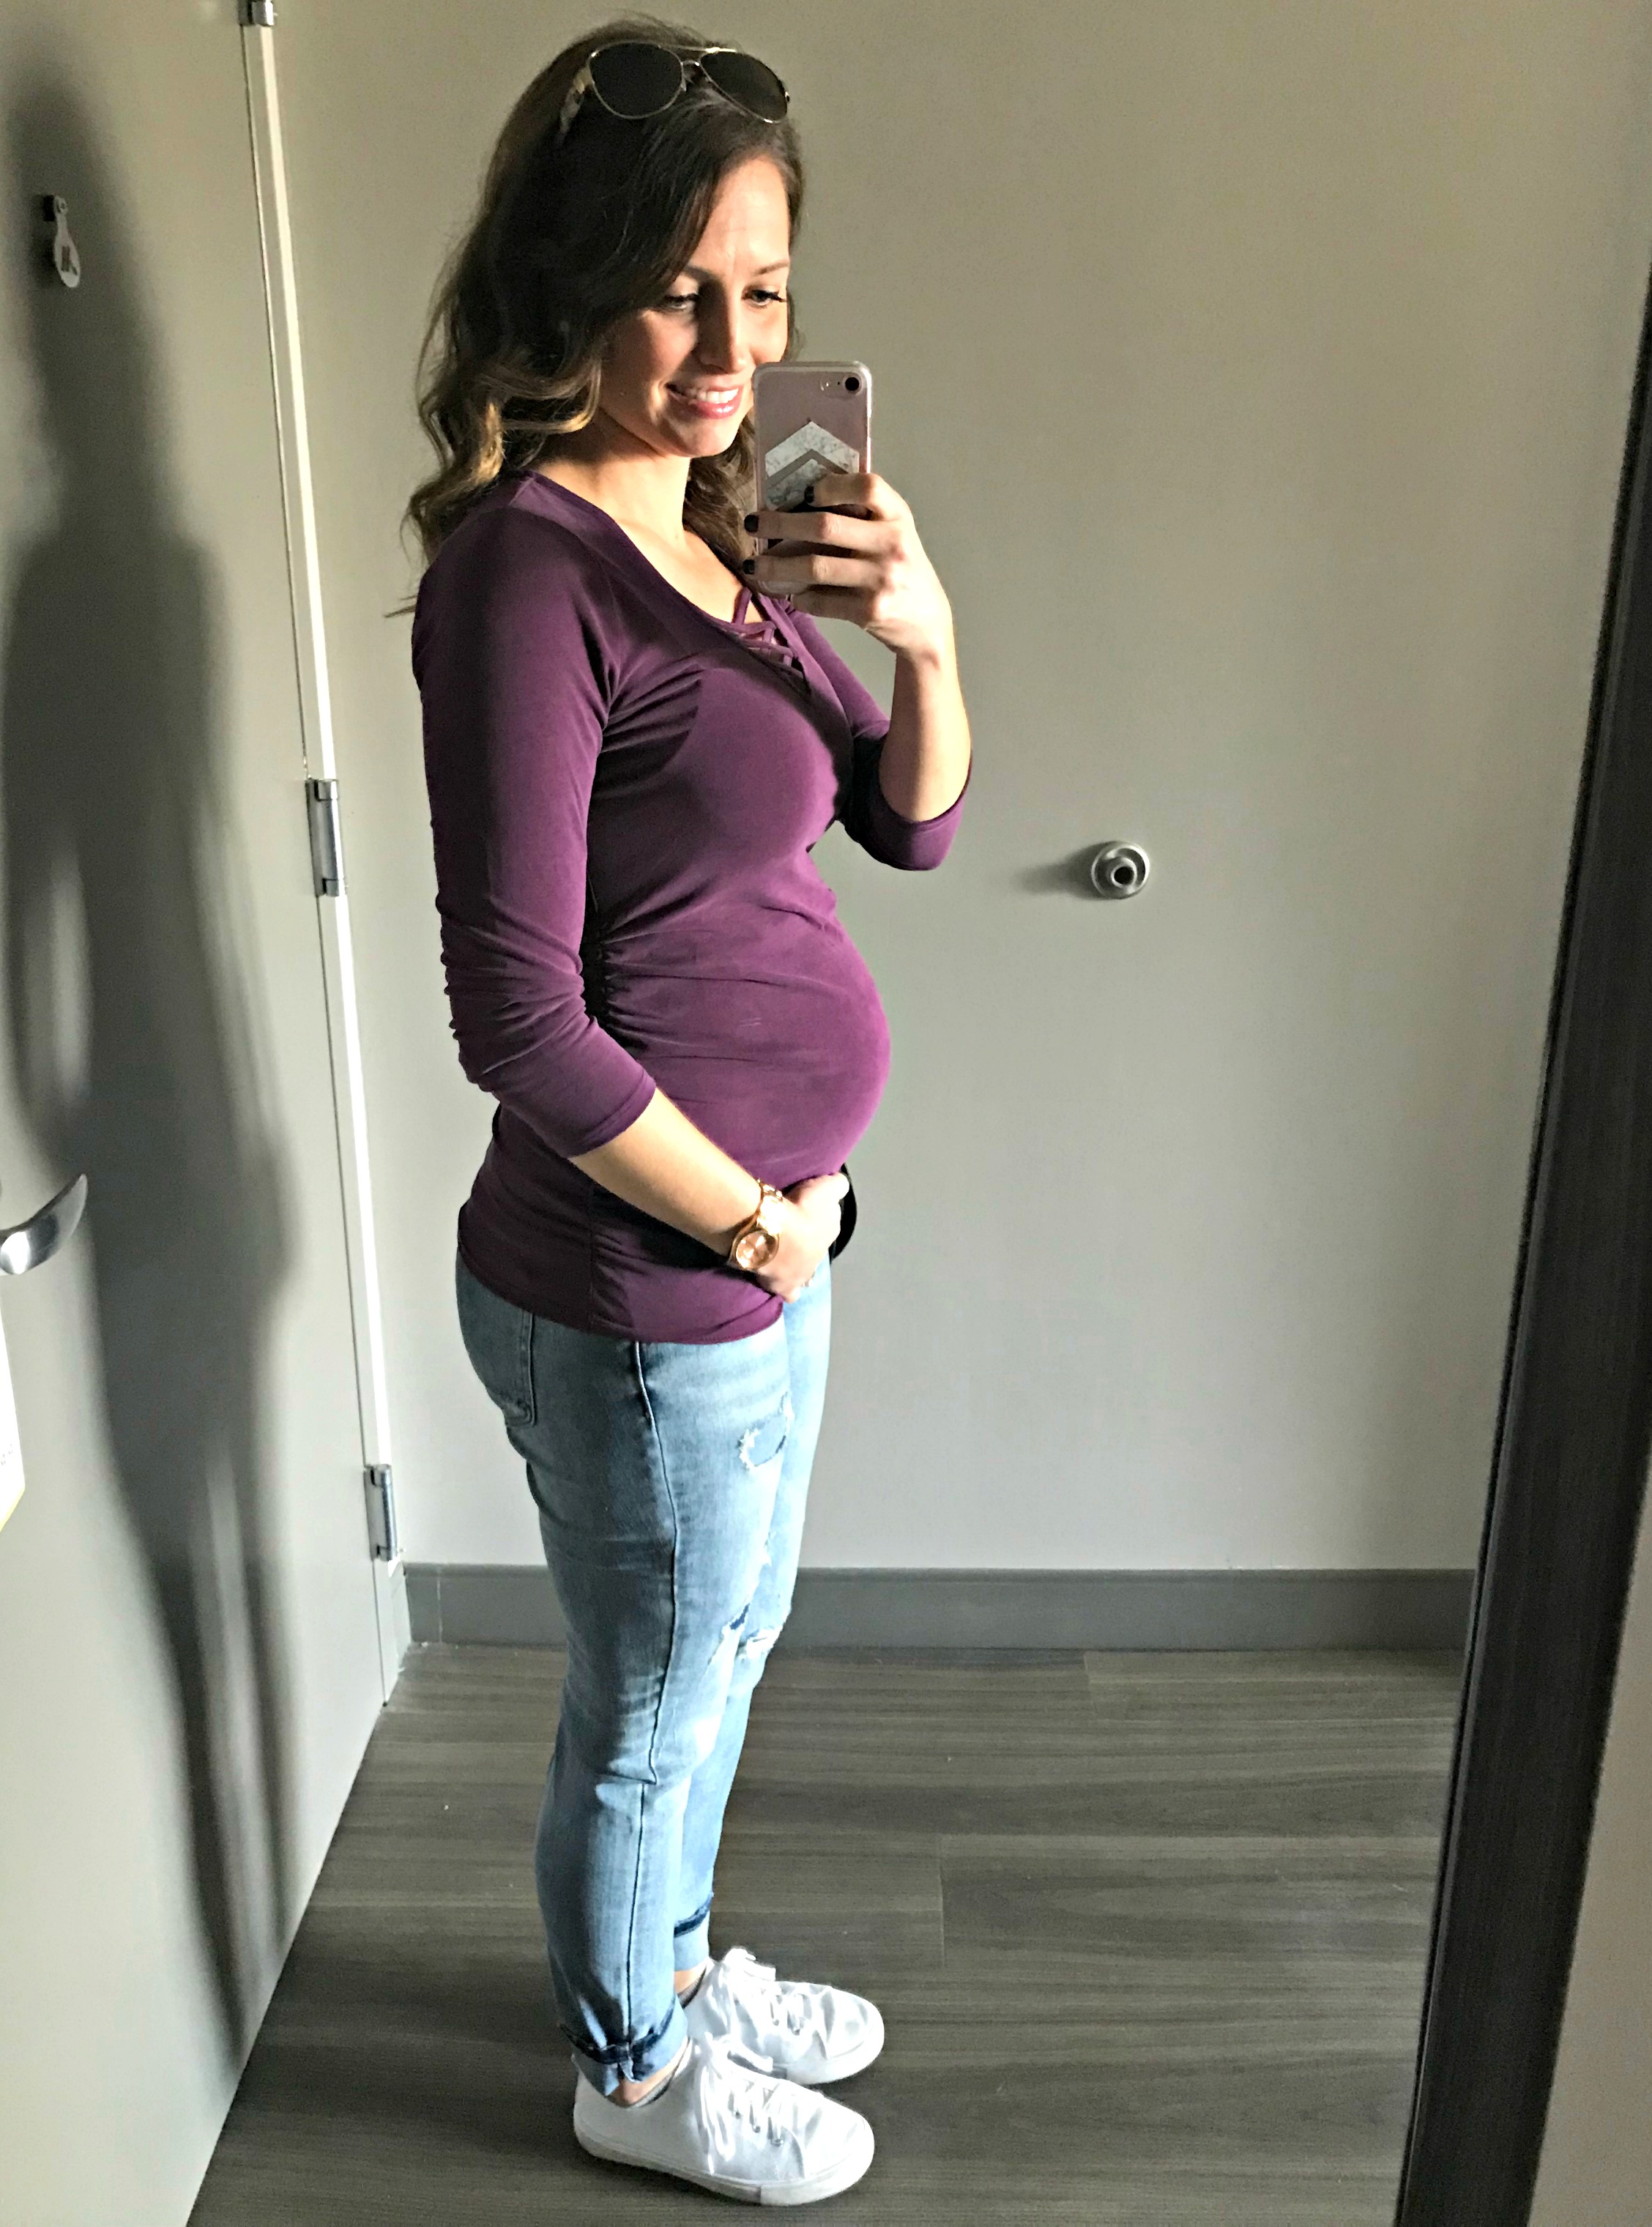 heather 19 weeks pregnant